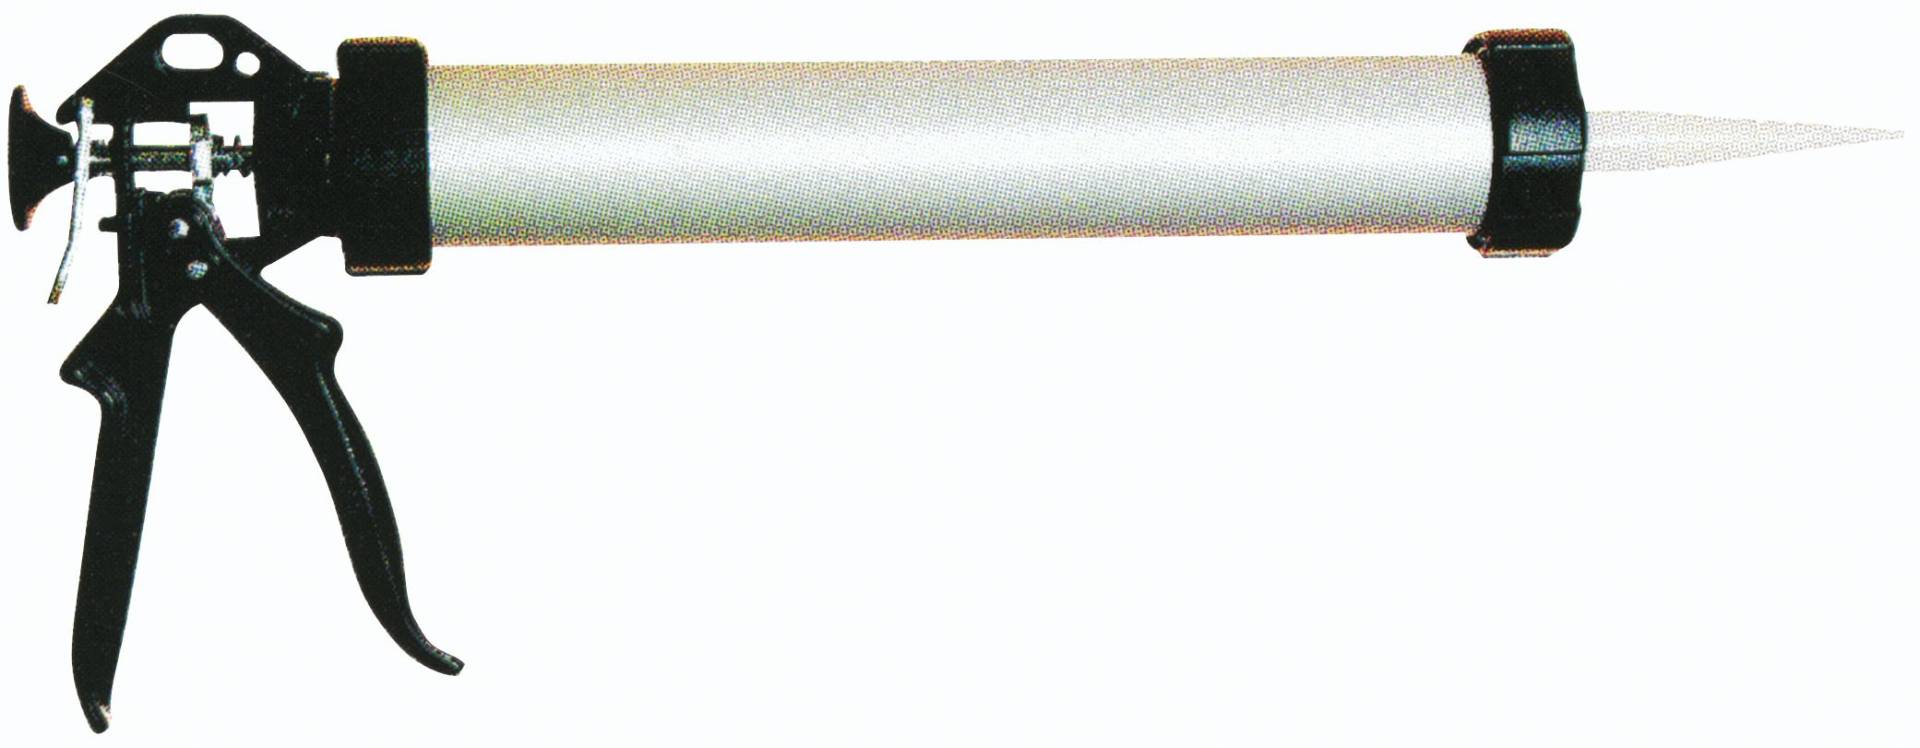 Liqui Moly 6225 Handdruck-Pistole, 1 Stück von Liqui Moly